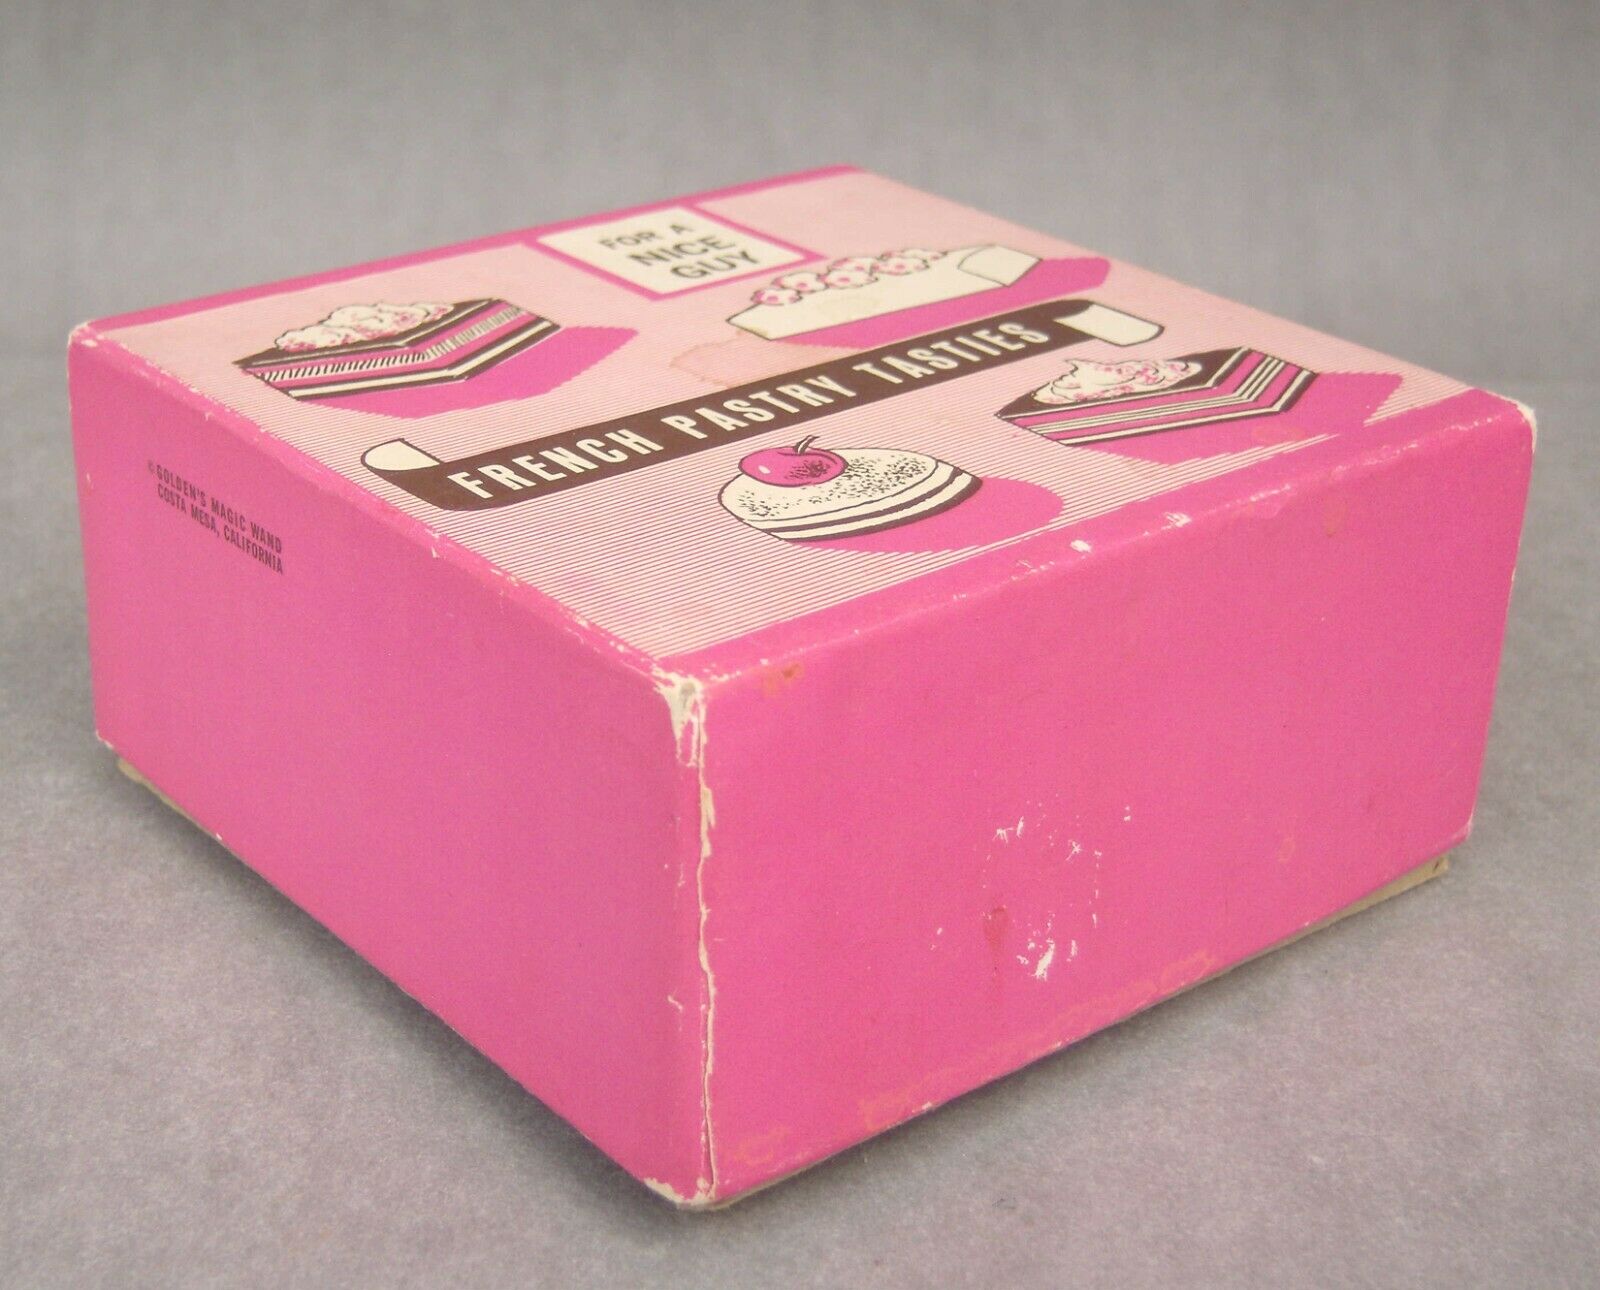 Vintage Novelty Gag Gift Box 